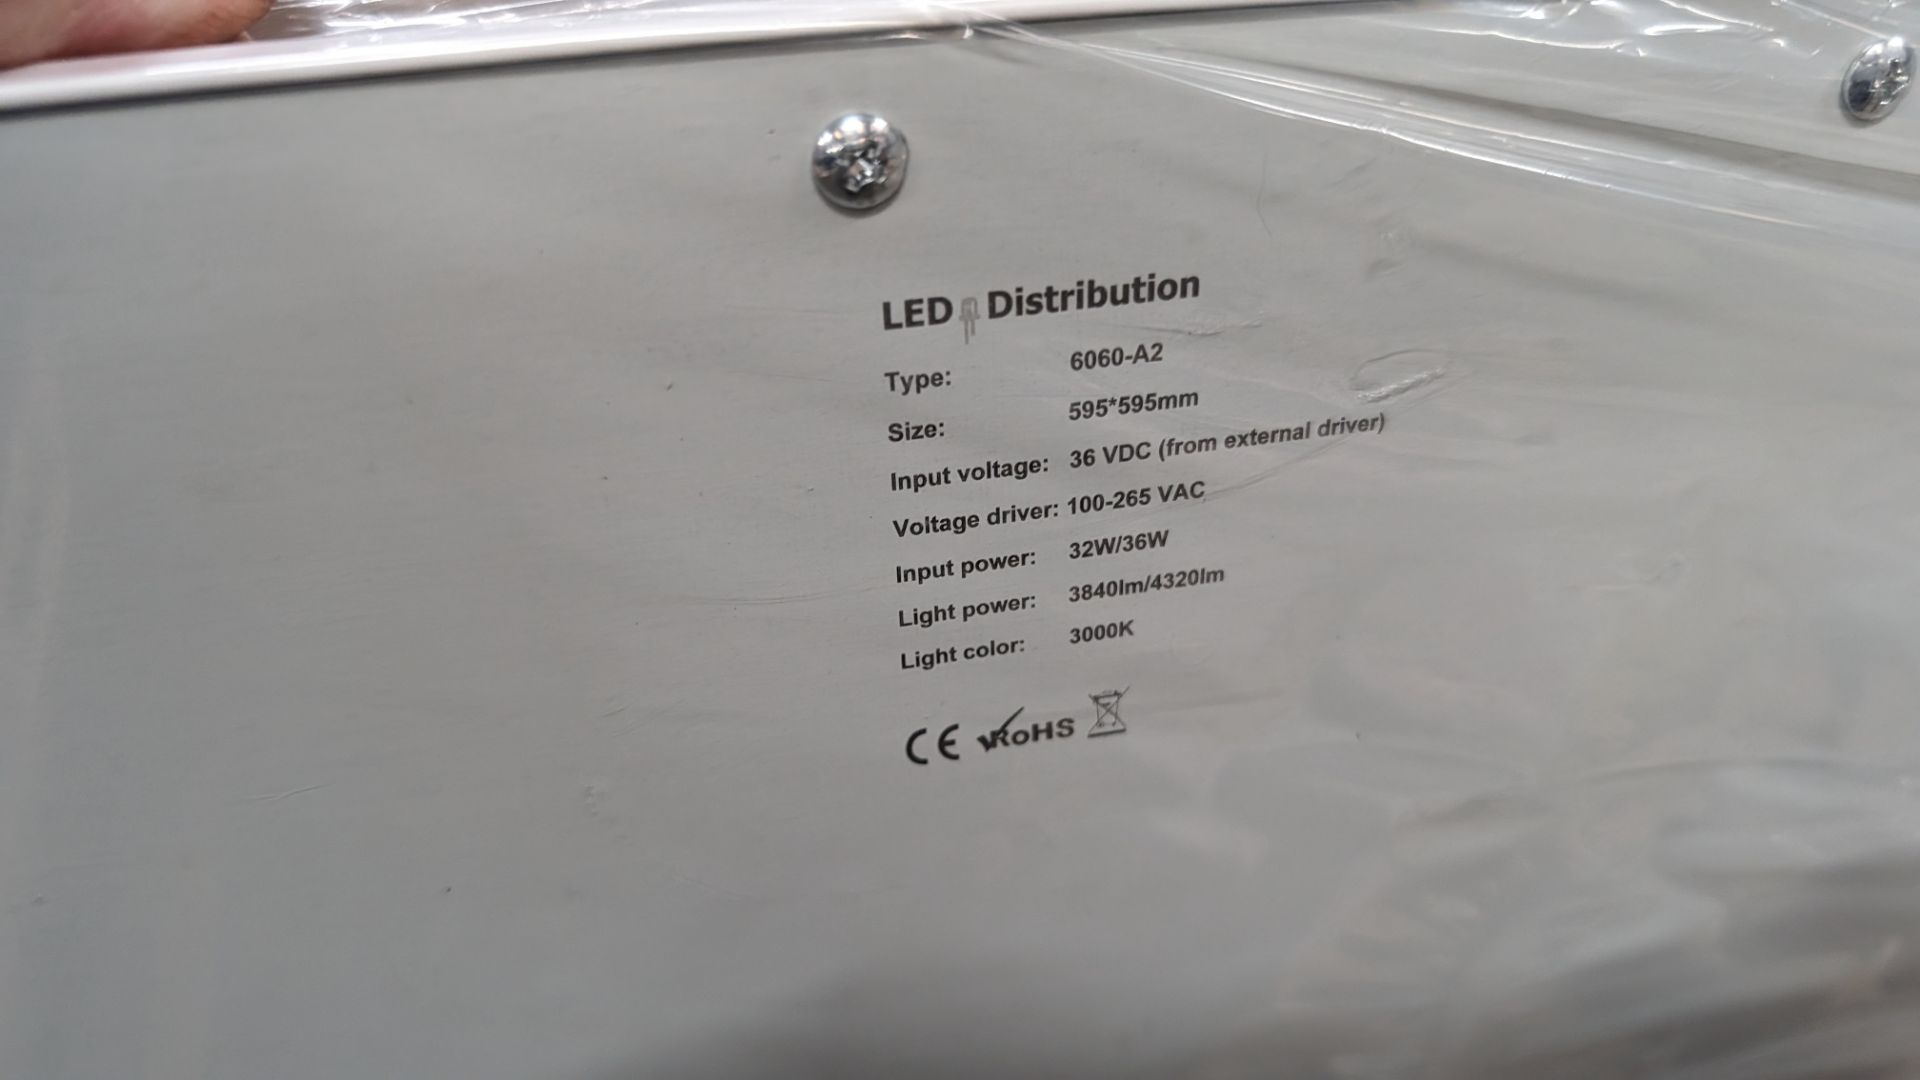 20 off Elegance Premium Eco 595mm x 595mm LED lighting panels. 3000k. 32/36w input power. 36w dri - Image 9 of 14